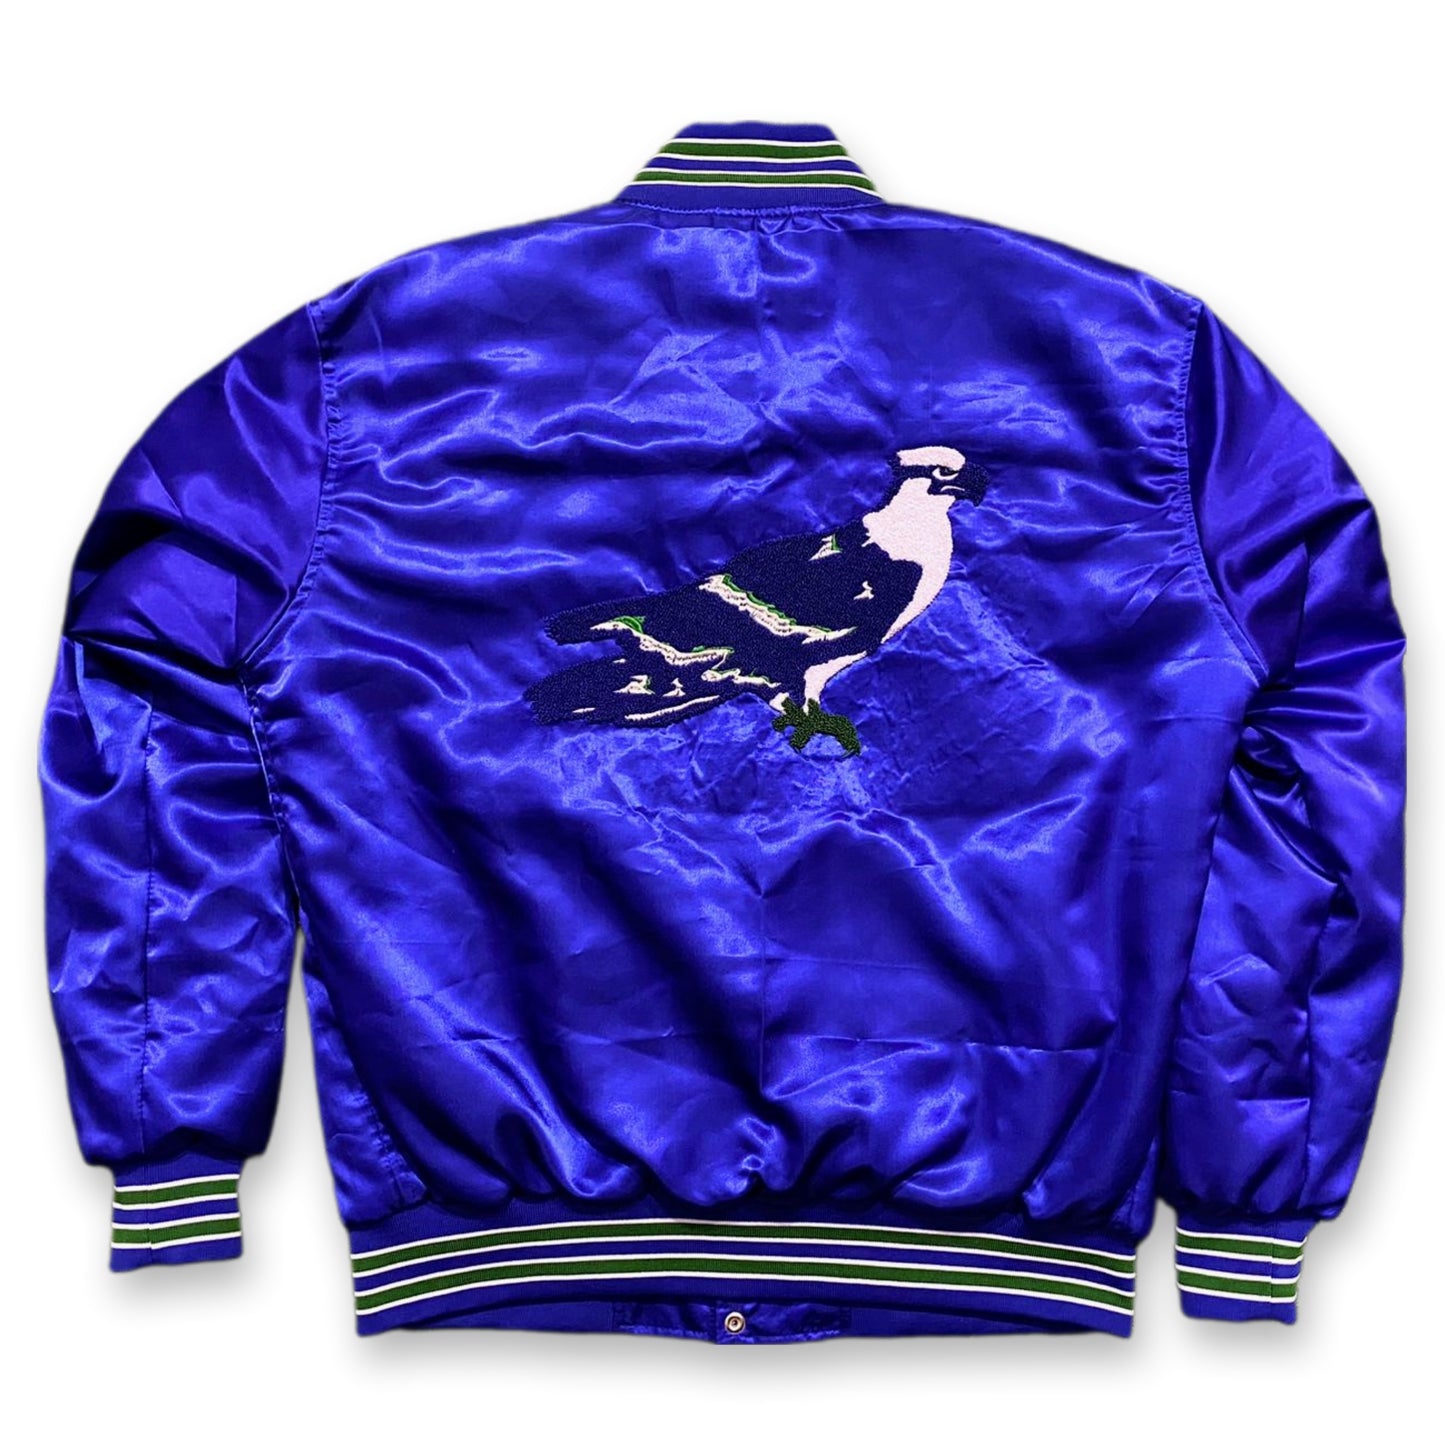 Hawksprey Sideline Jacket - Royal